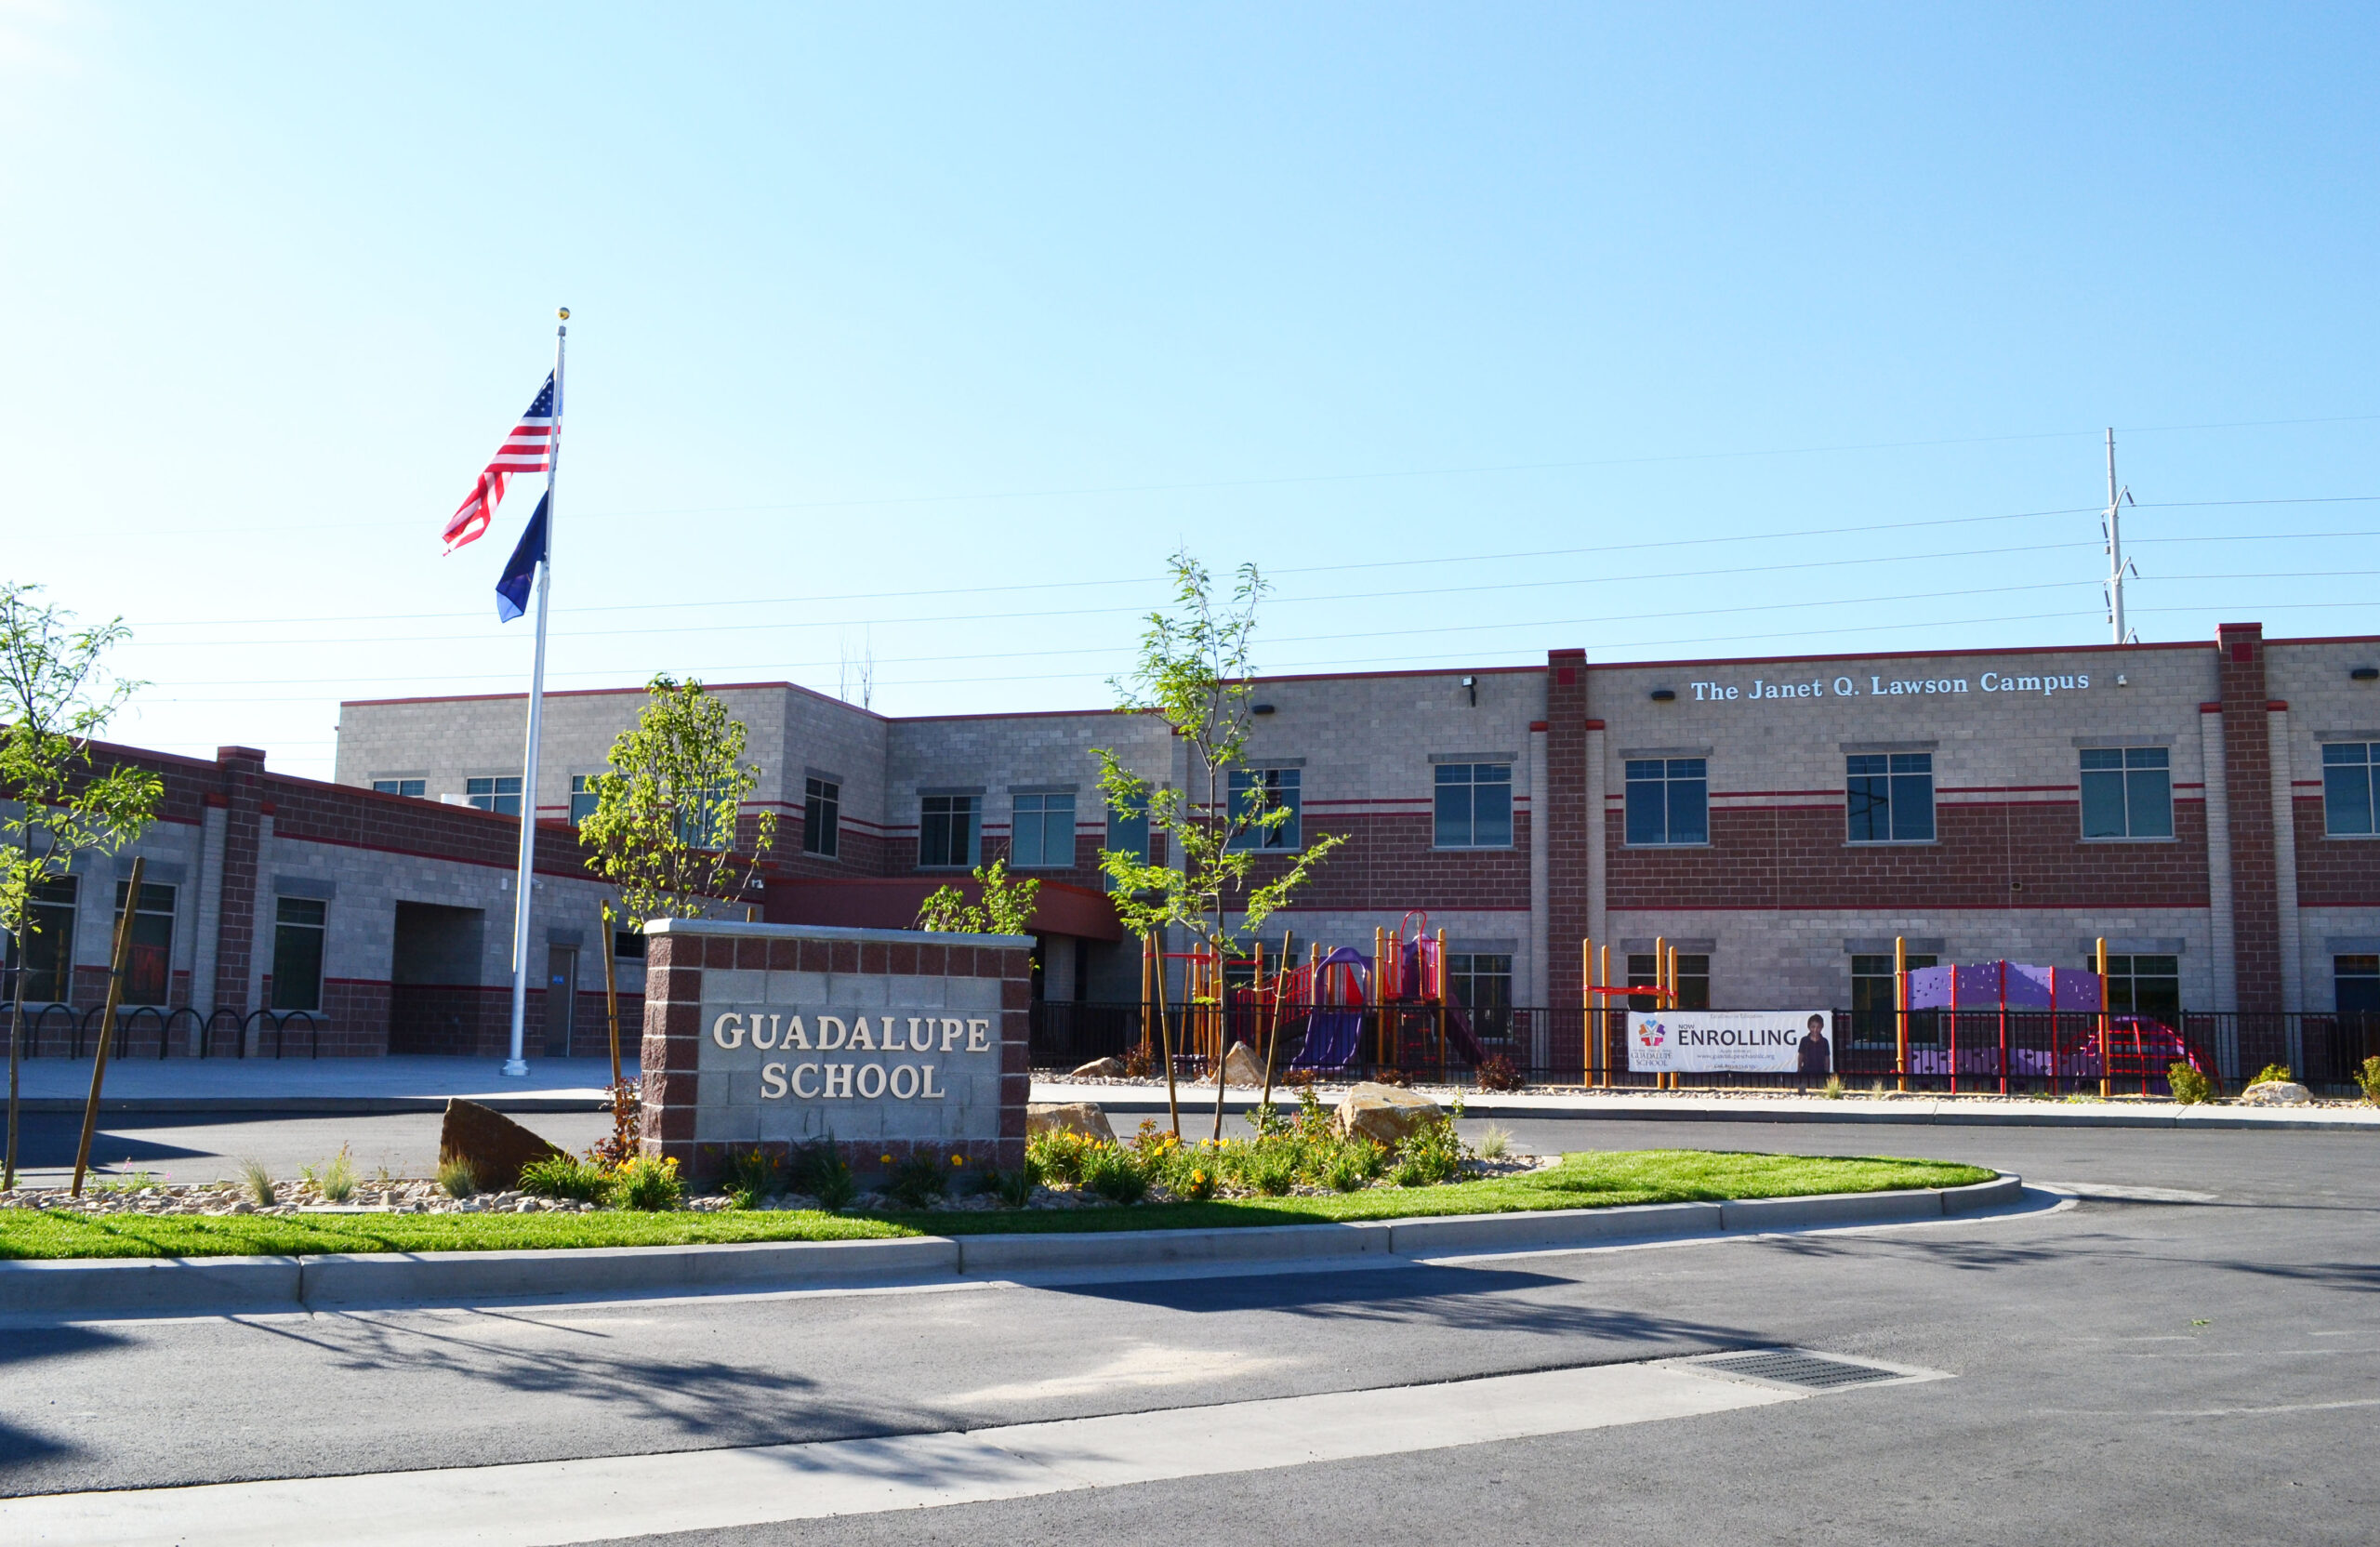 Guadalupe School